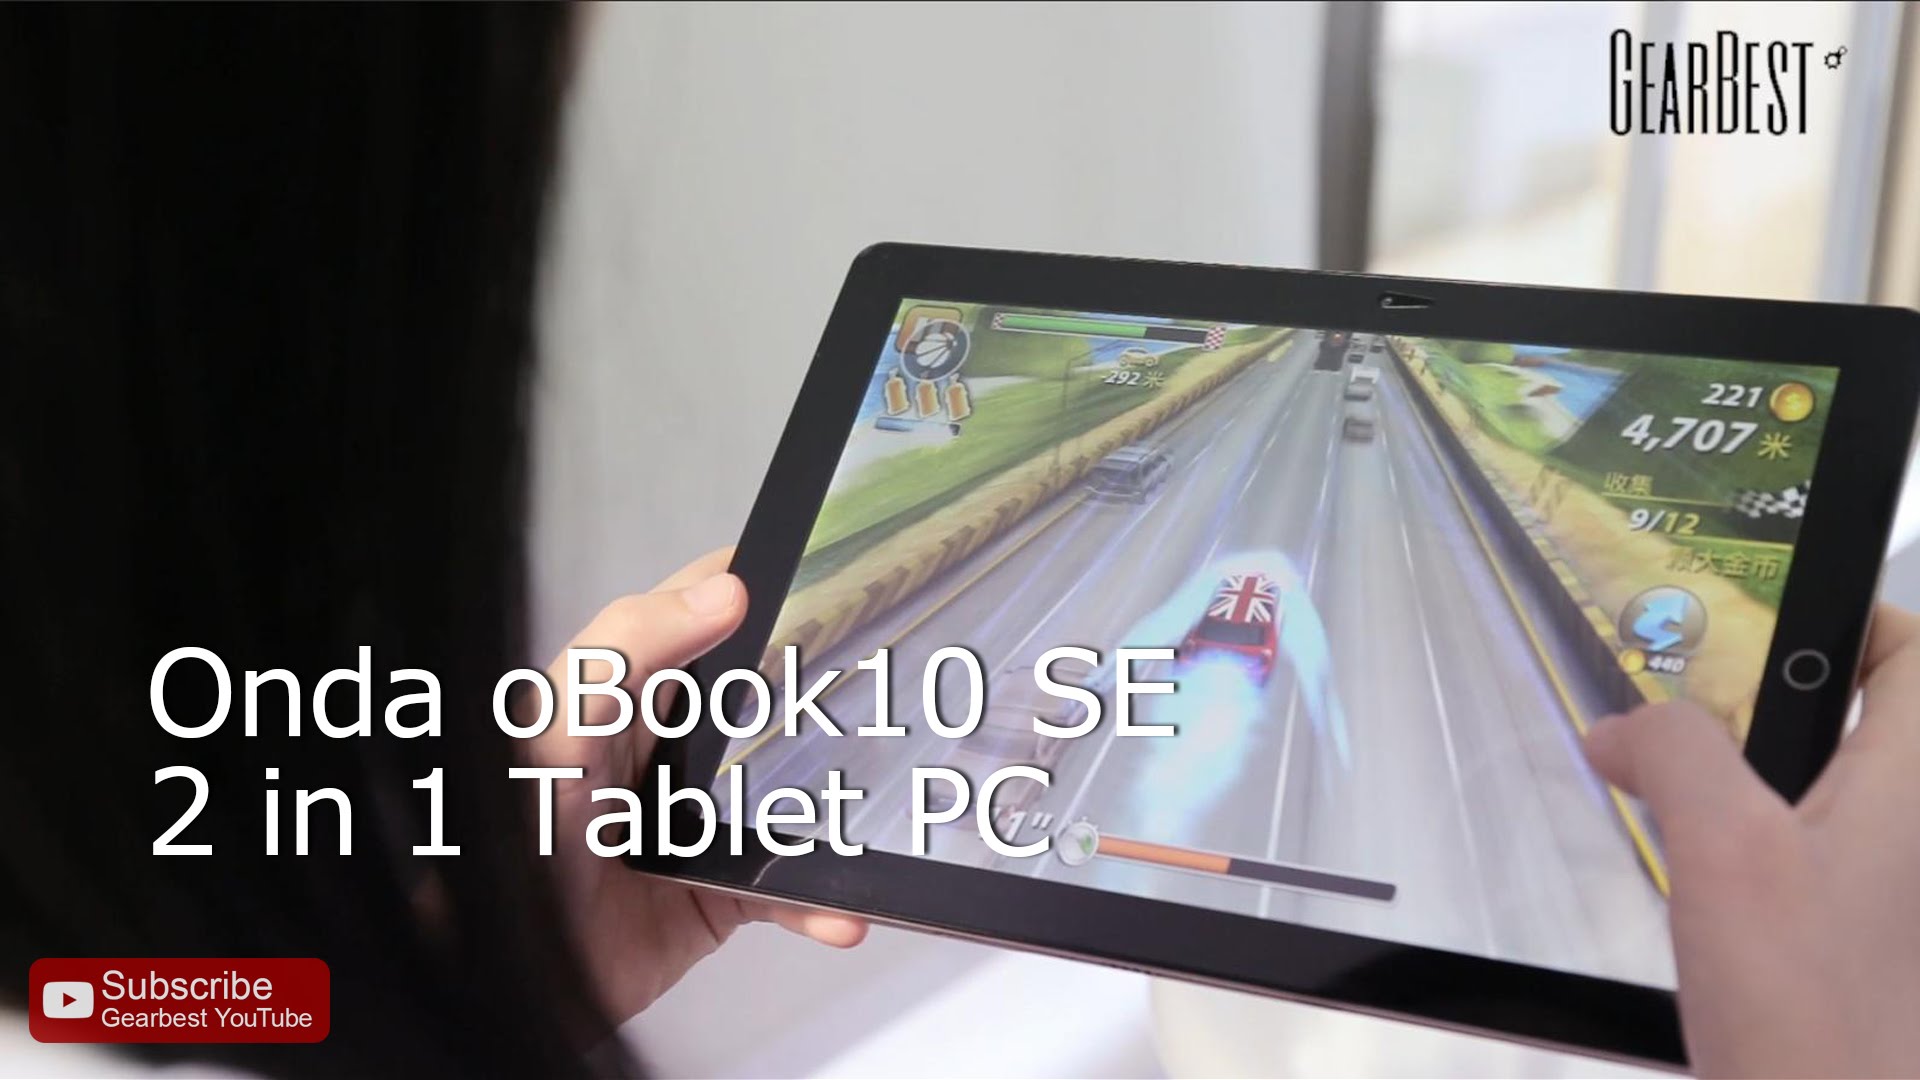 Onda oBook10 SE 2 in 1 Tablet PC – Gearbest.com